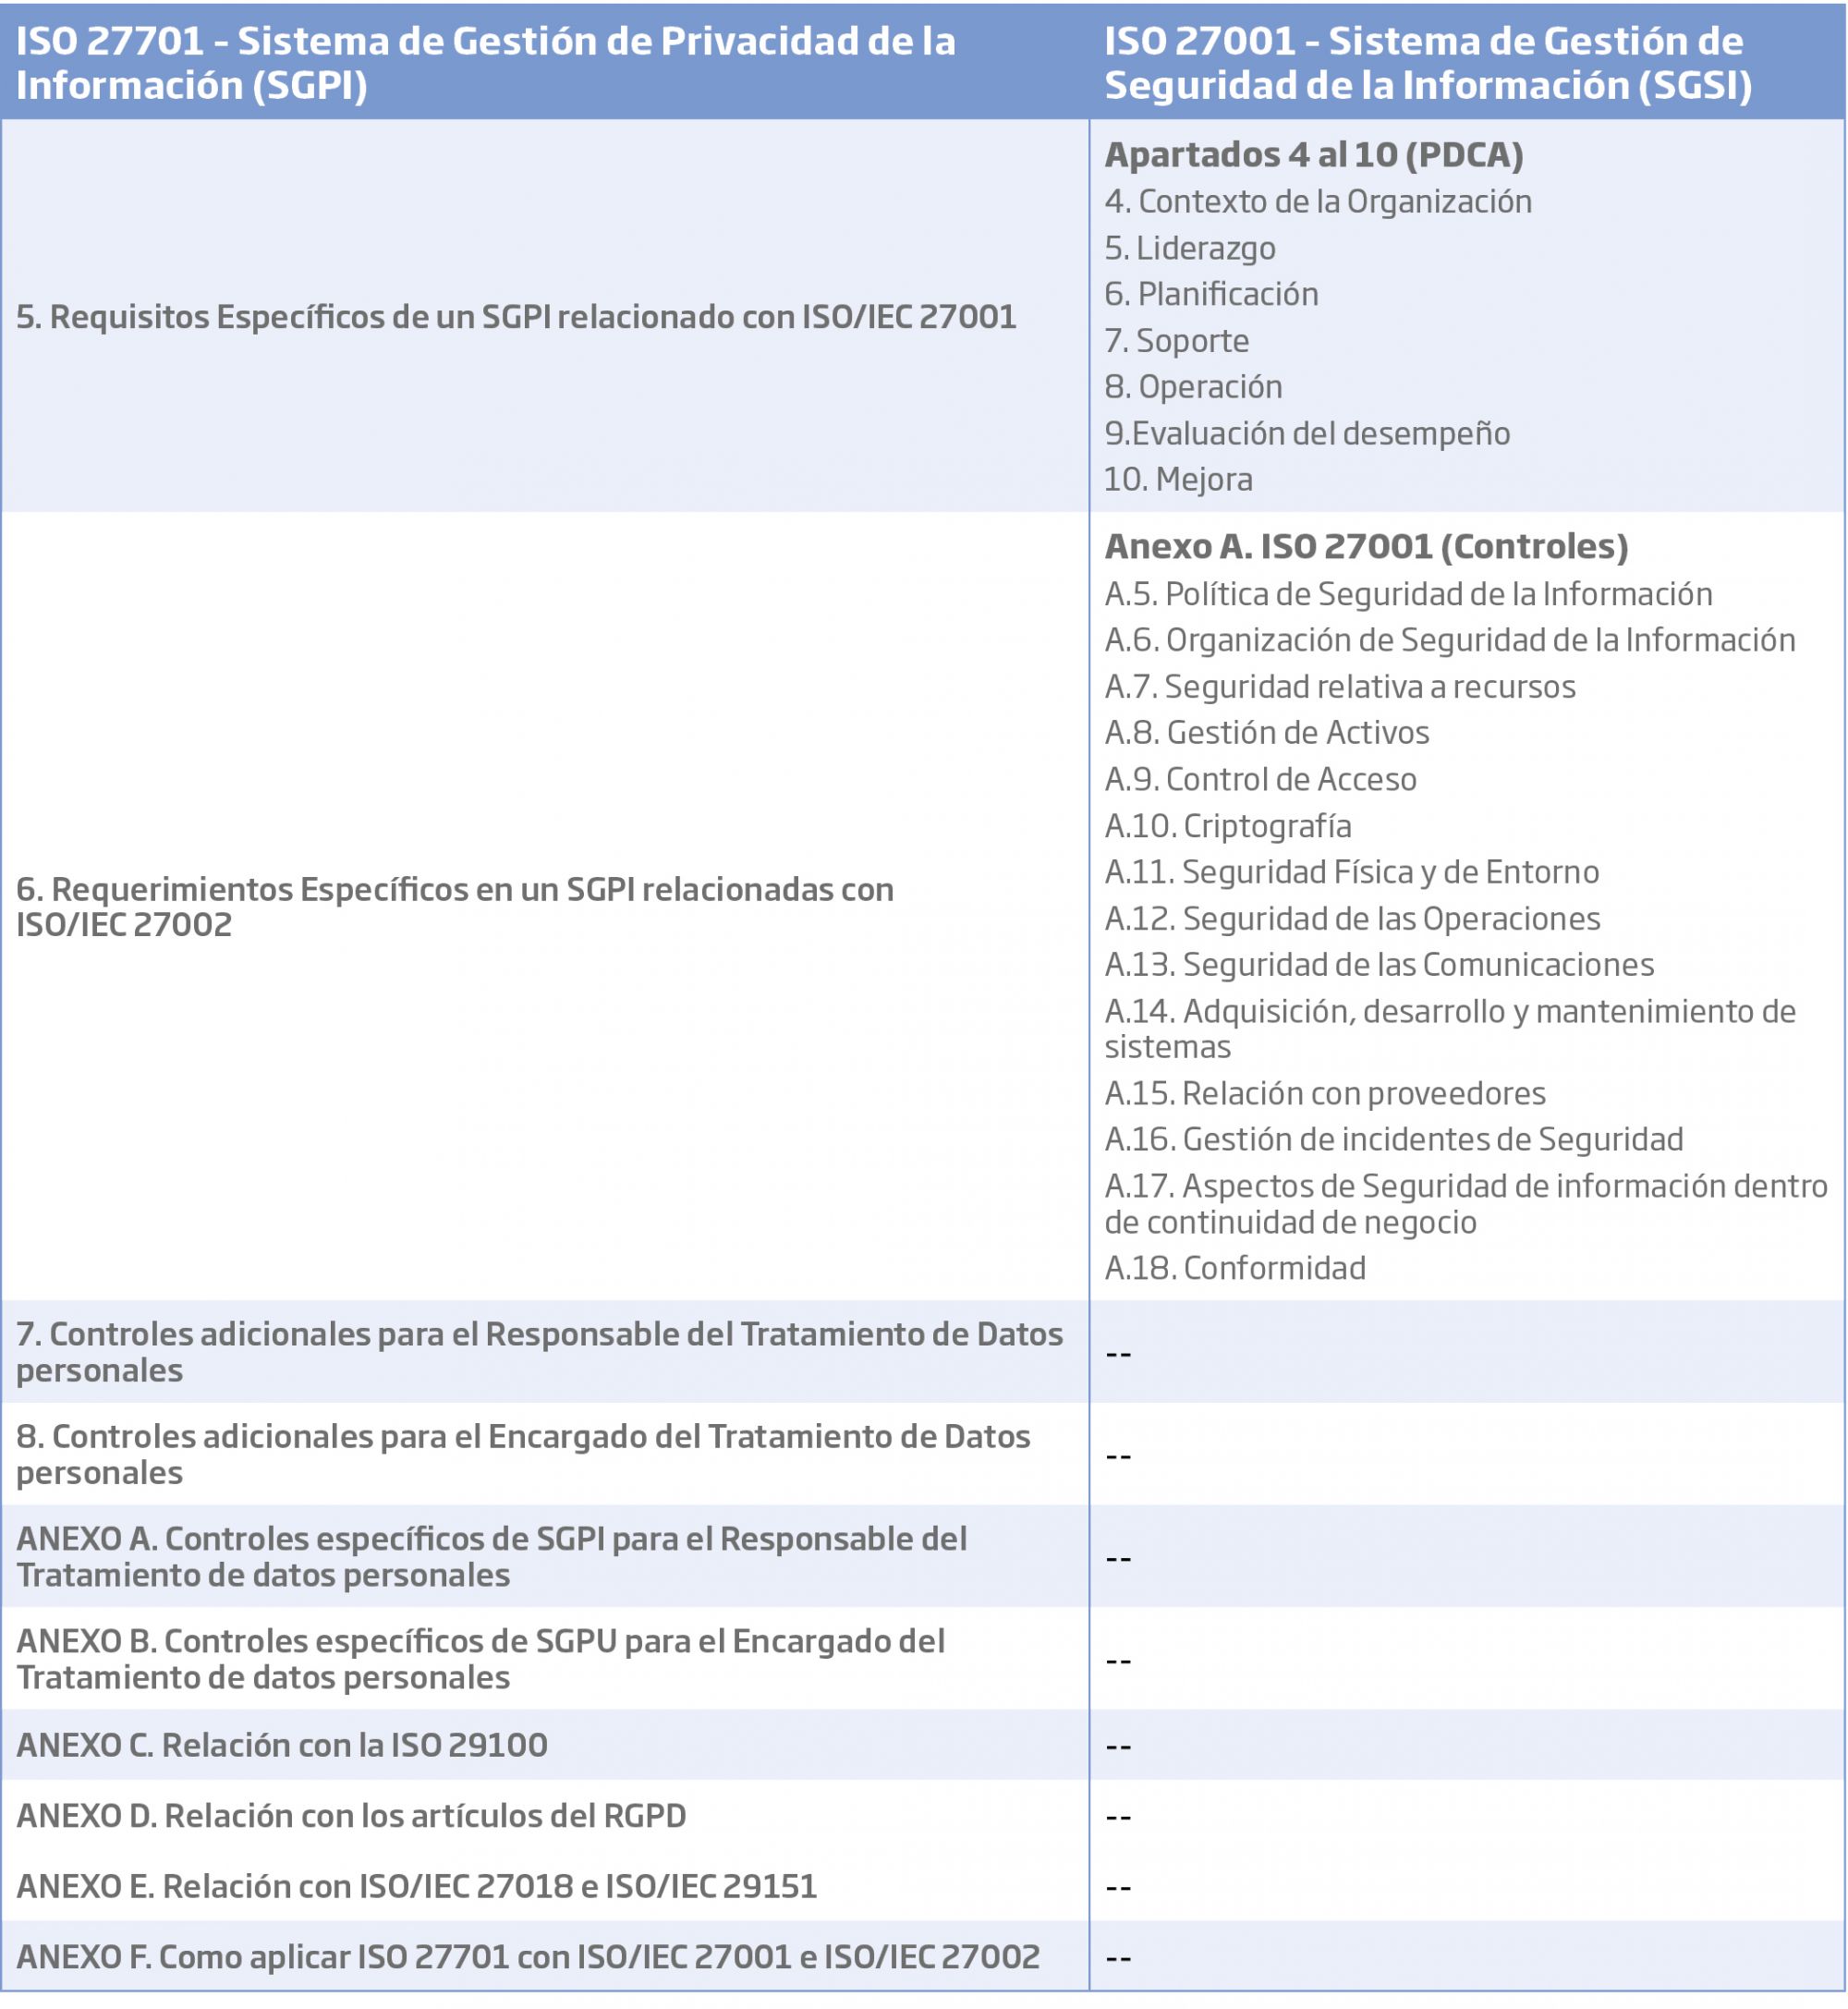 Tabla 1. Relación entre ISO/IEC 27701 e ISO/IEC 27001